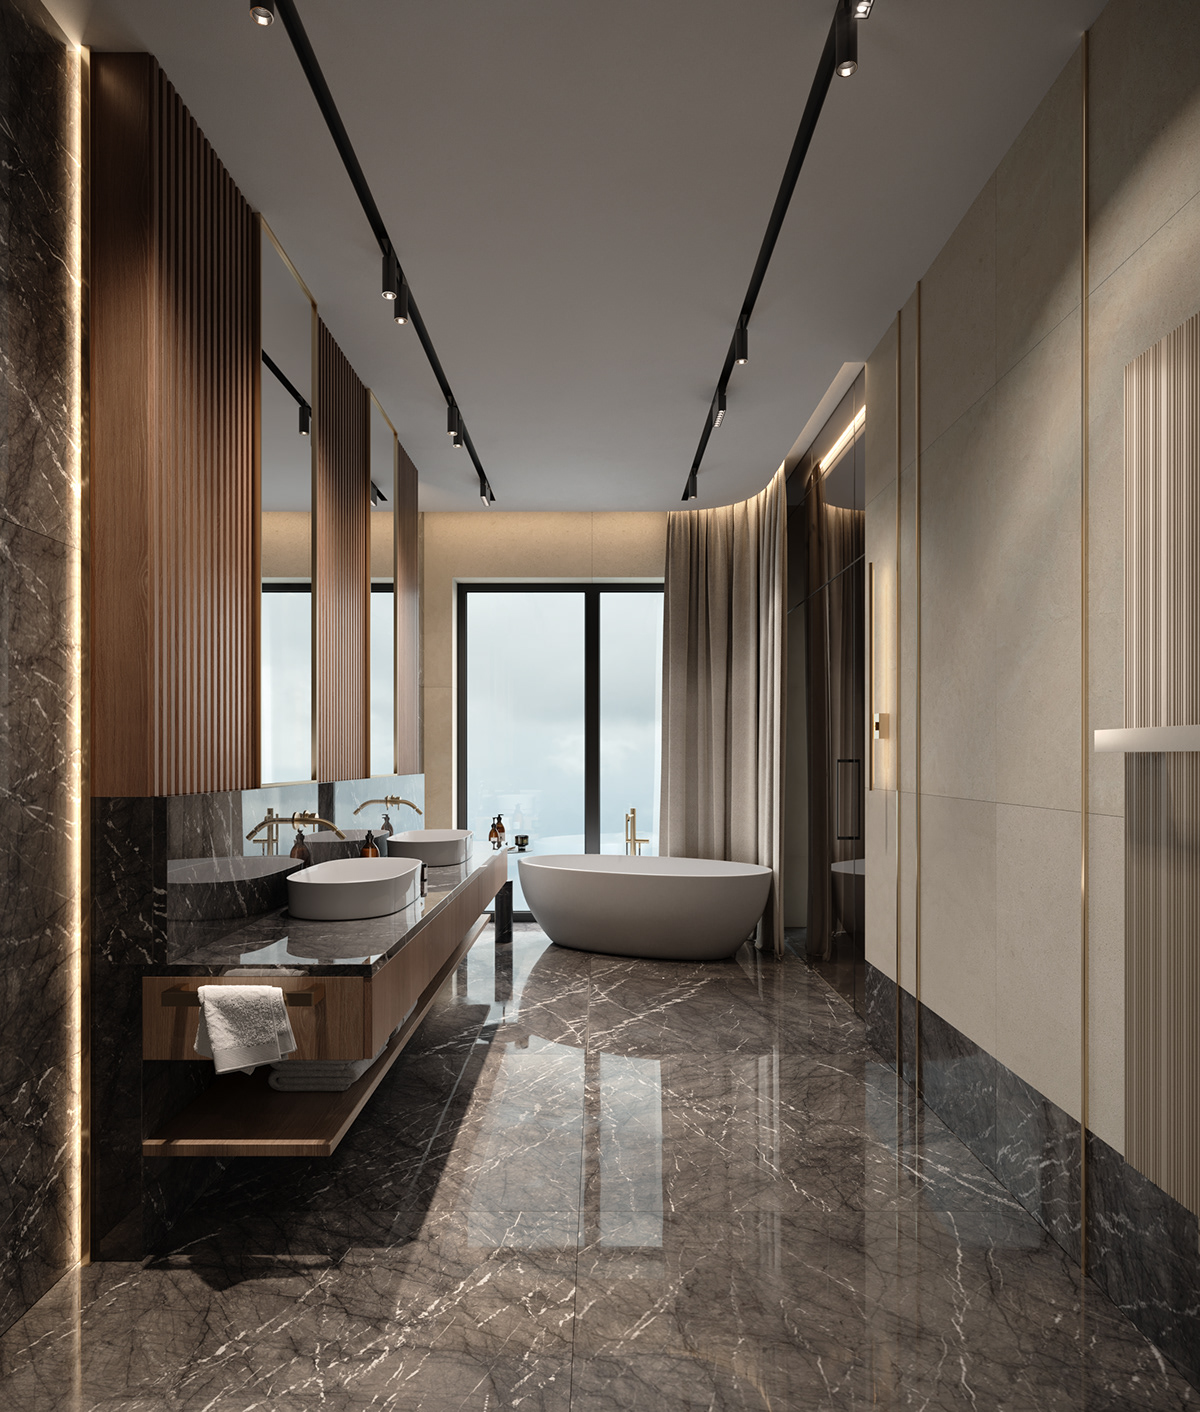 Interior design house visualization bedroom luxury elegant bathroom interior design  modern